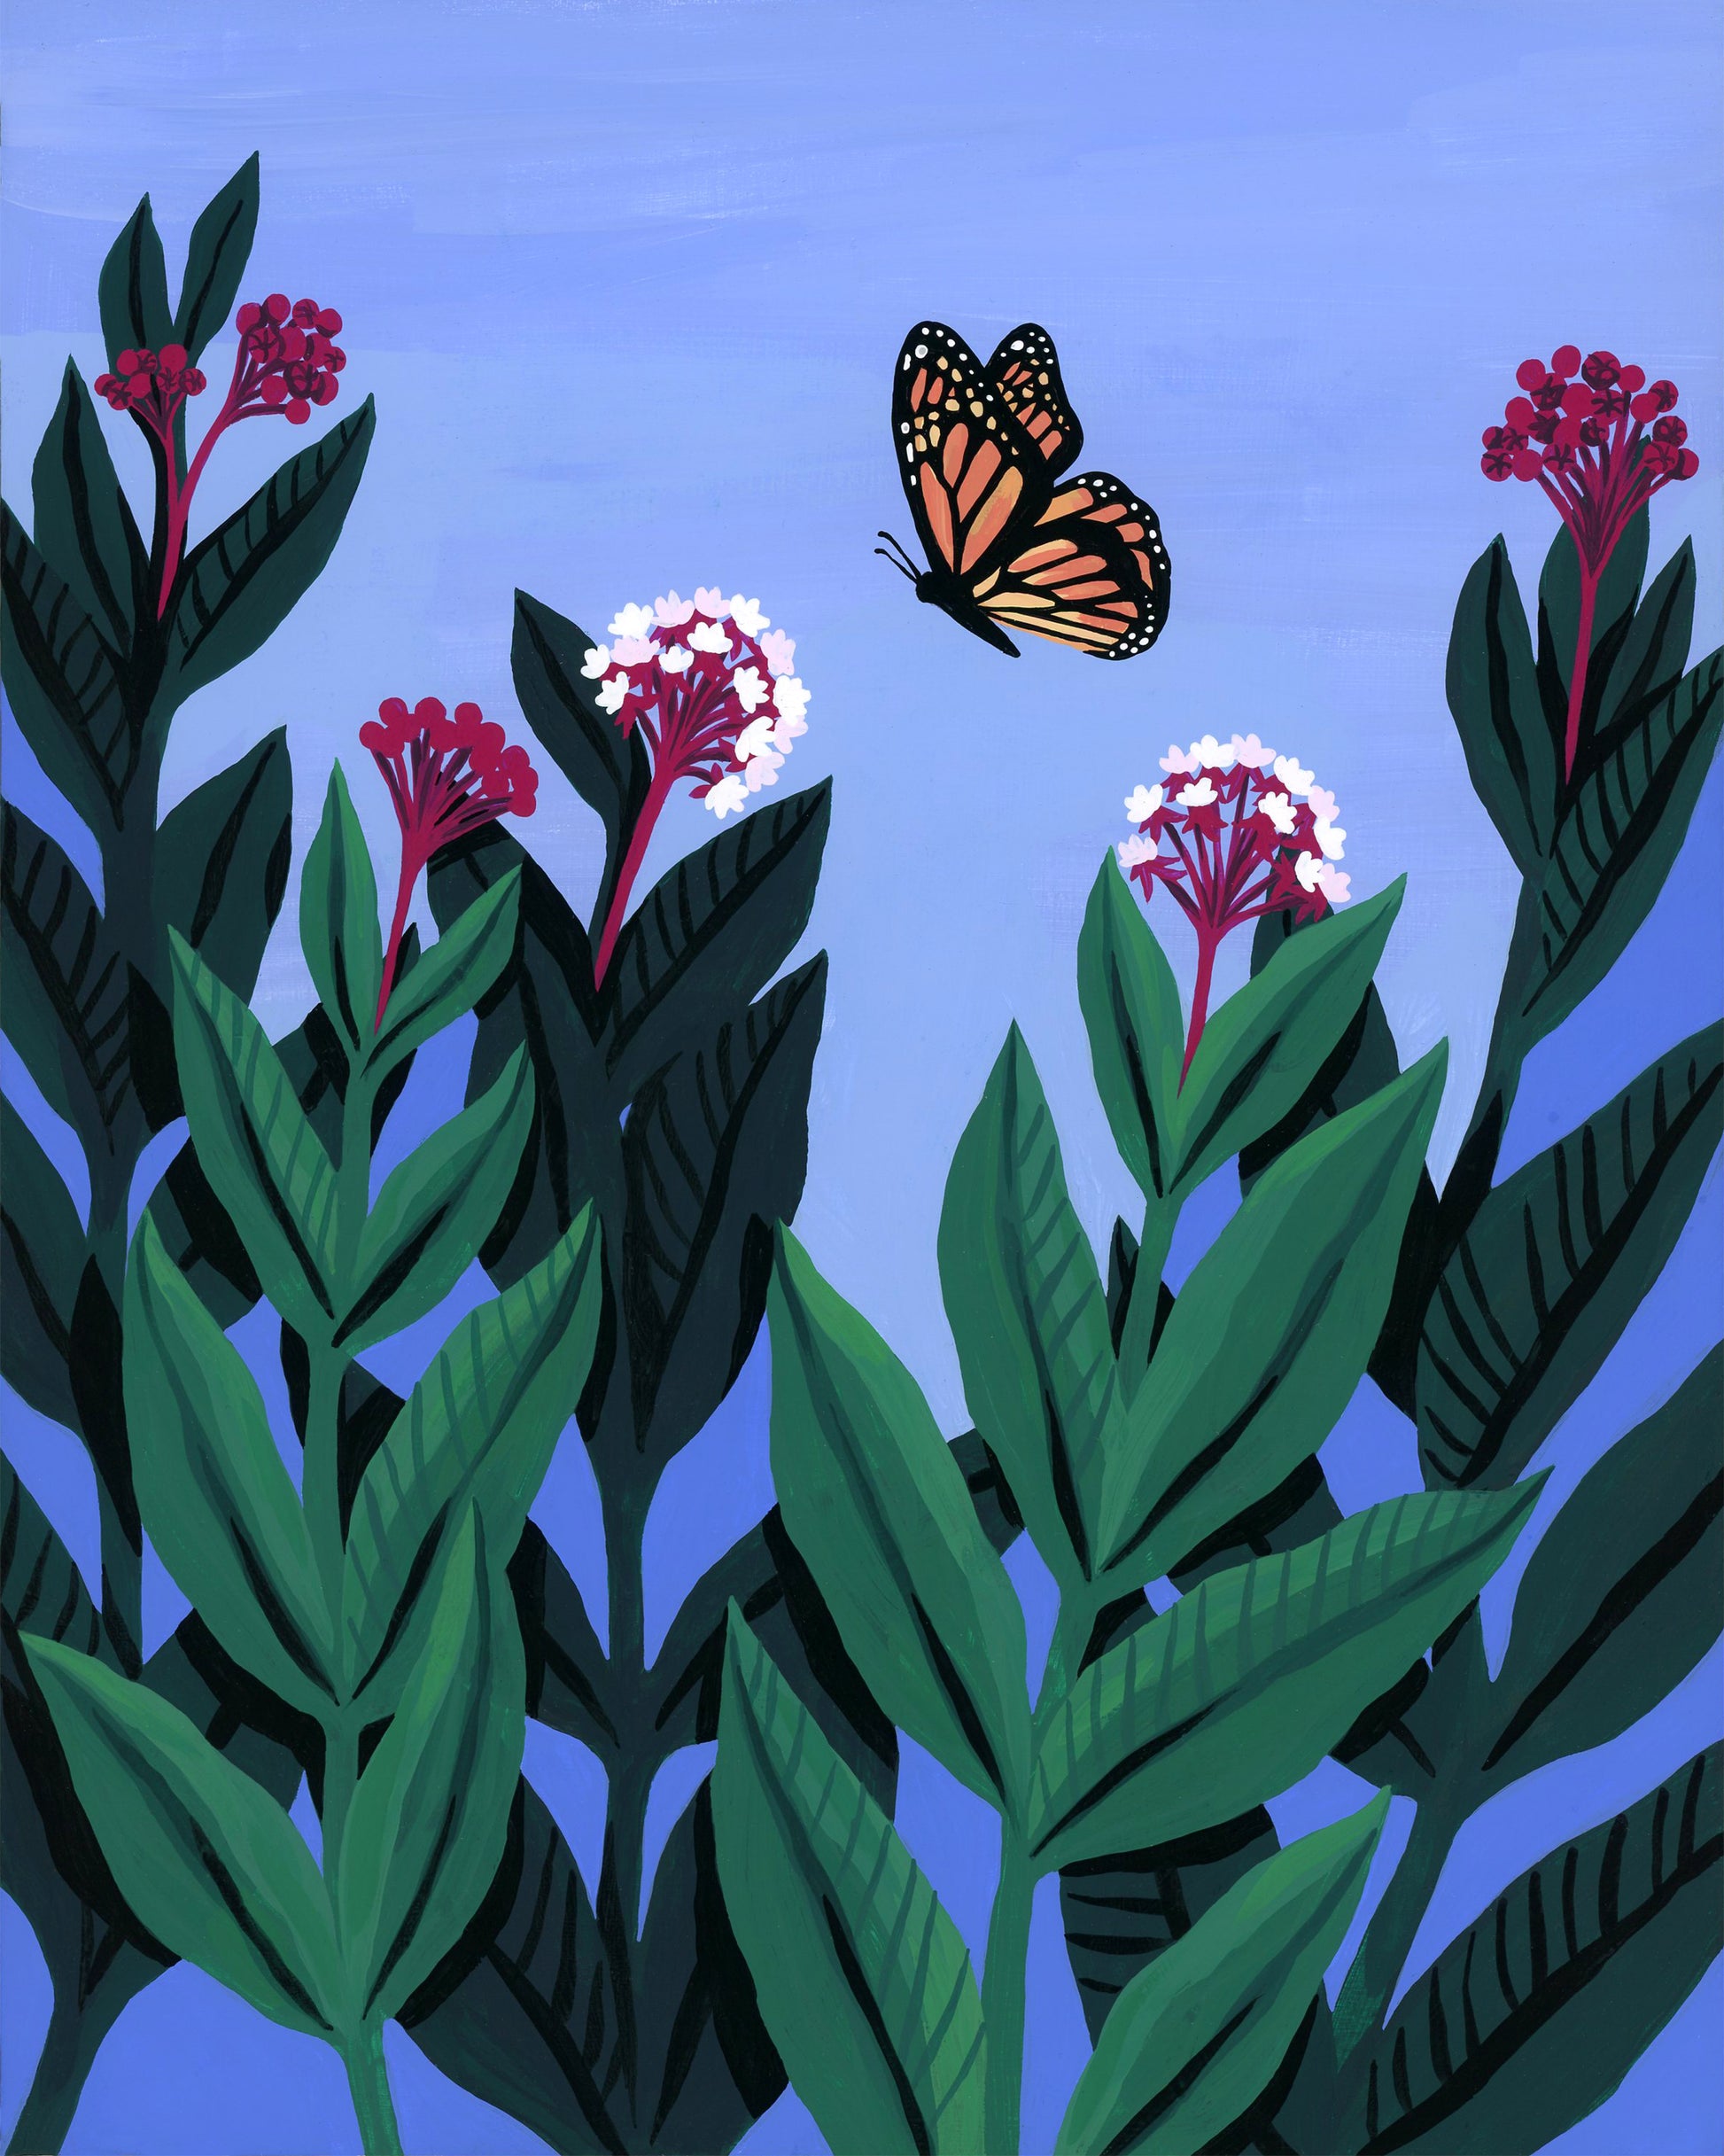 Original painting of monarchs and milkweeds